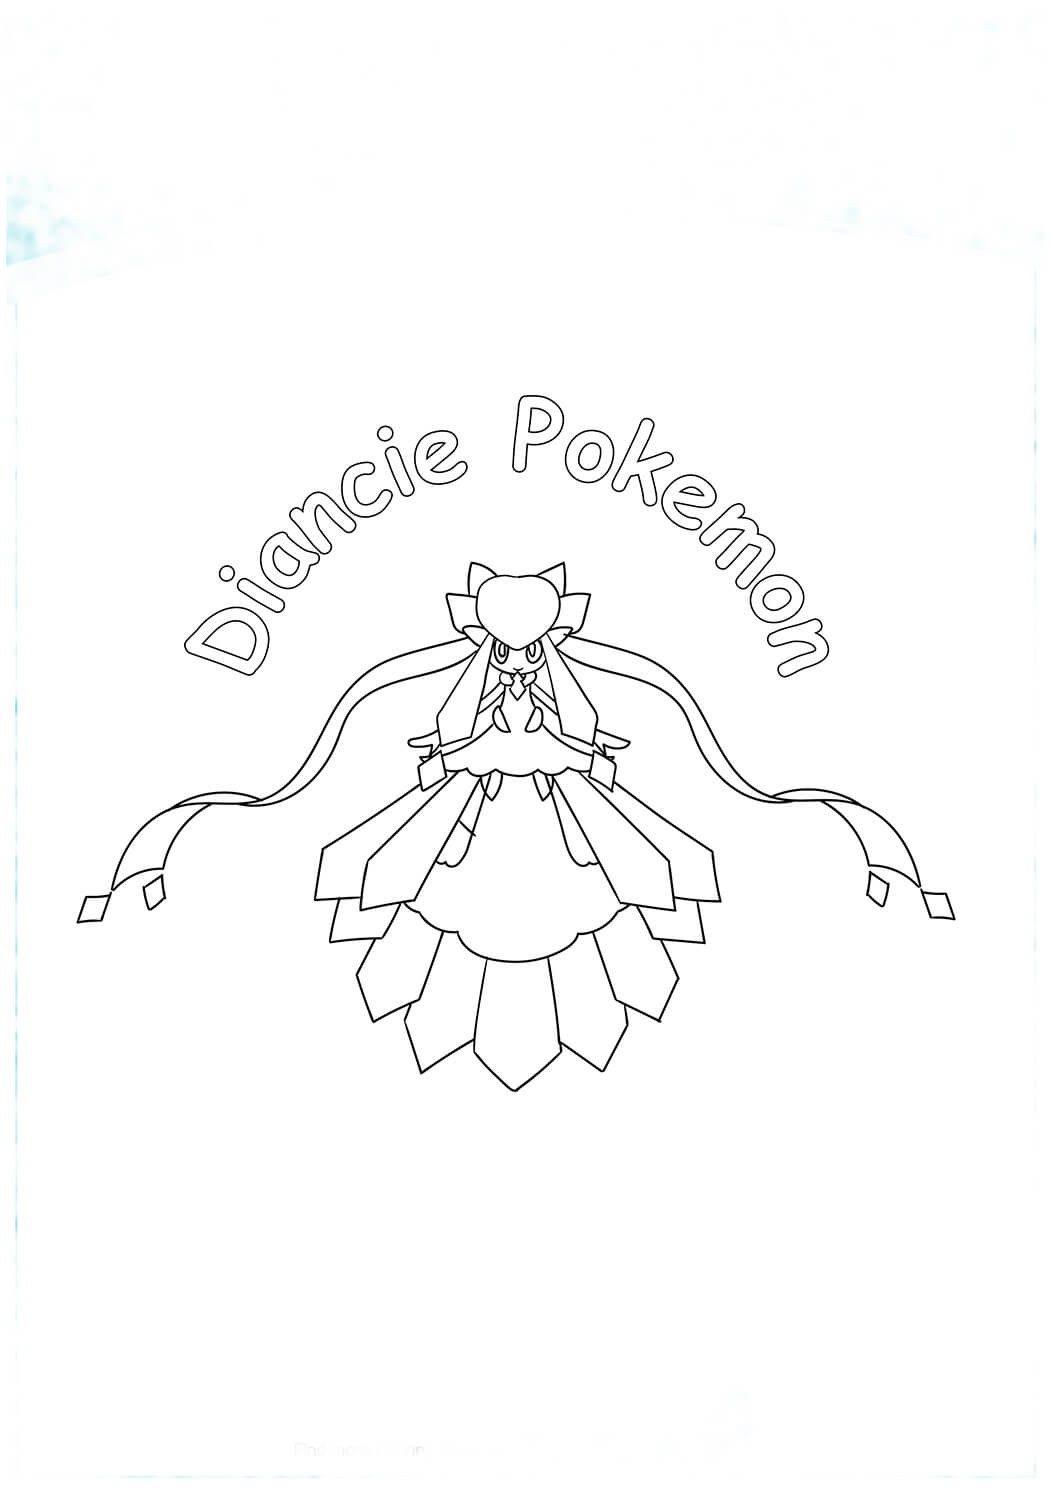 Diancie Pokemon coloring page